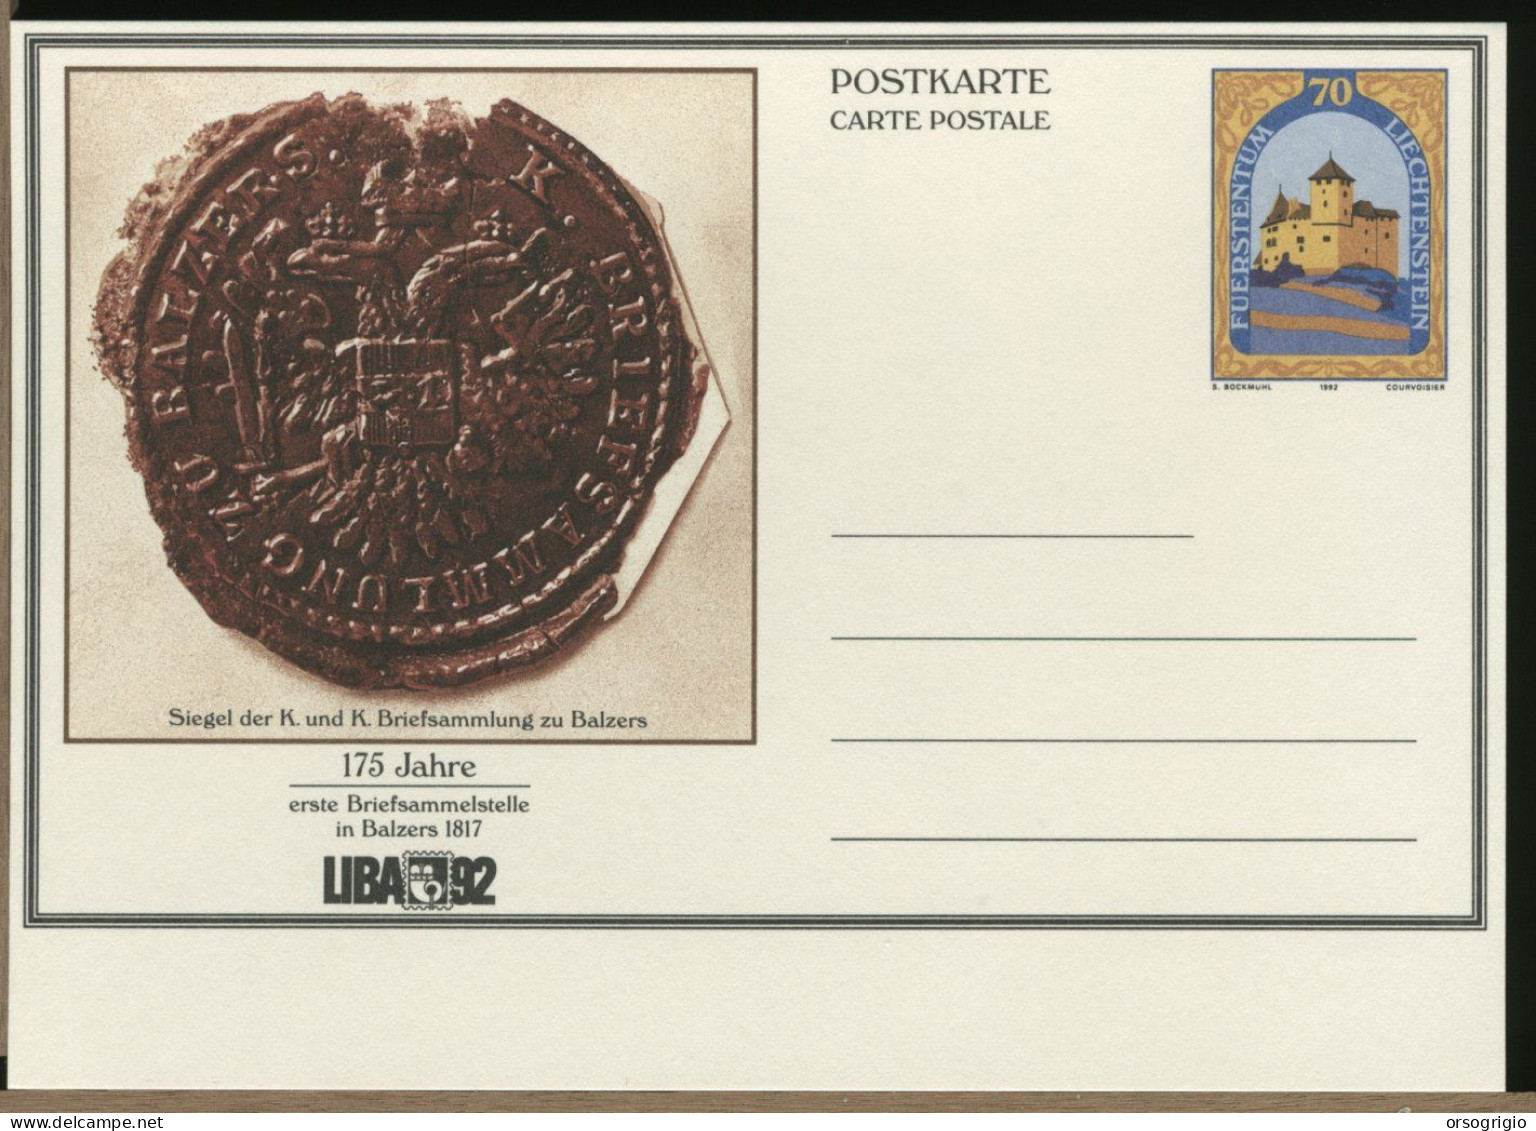 LIECHTENSTEIN - Cartolina Intero Postale - POSTKARTE - BALZERS - LIBA 1992 - Stamped Stationery